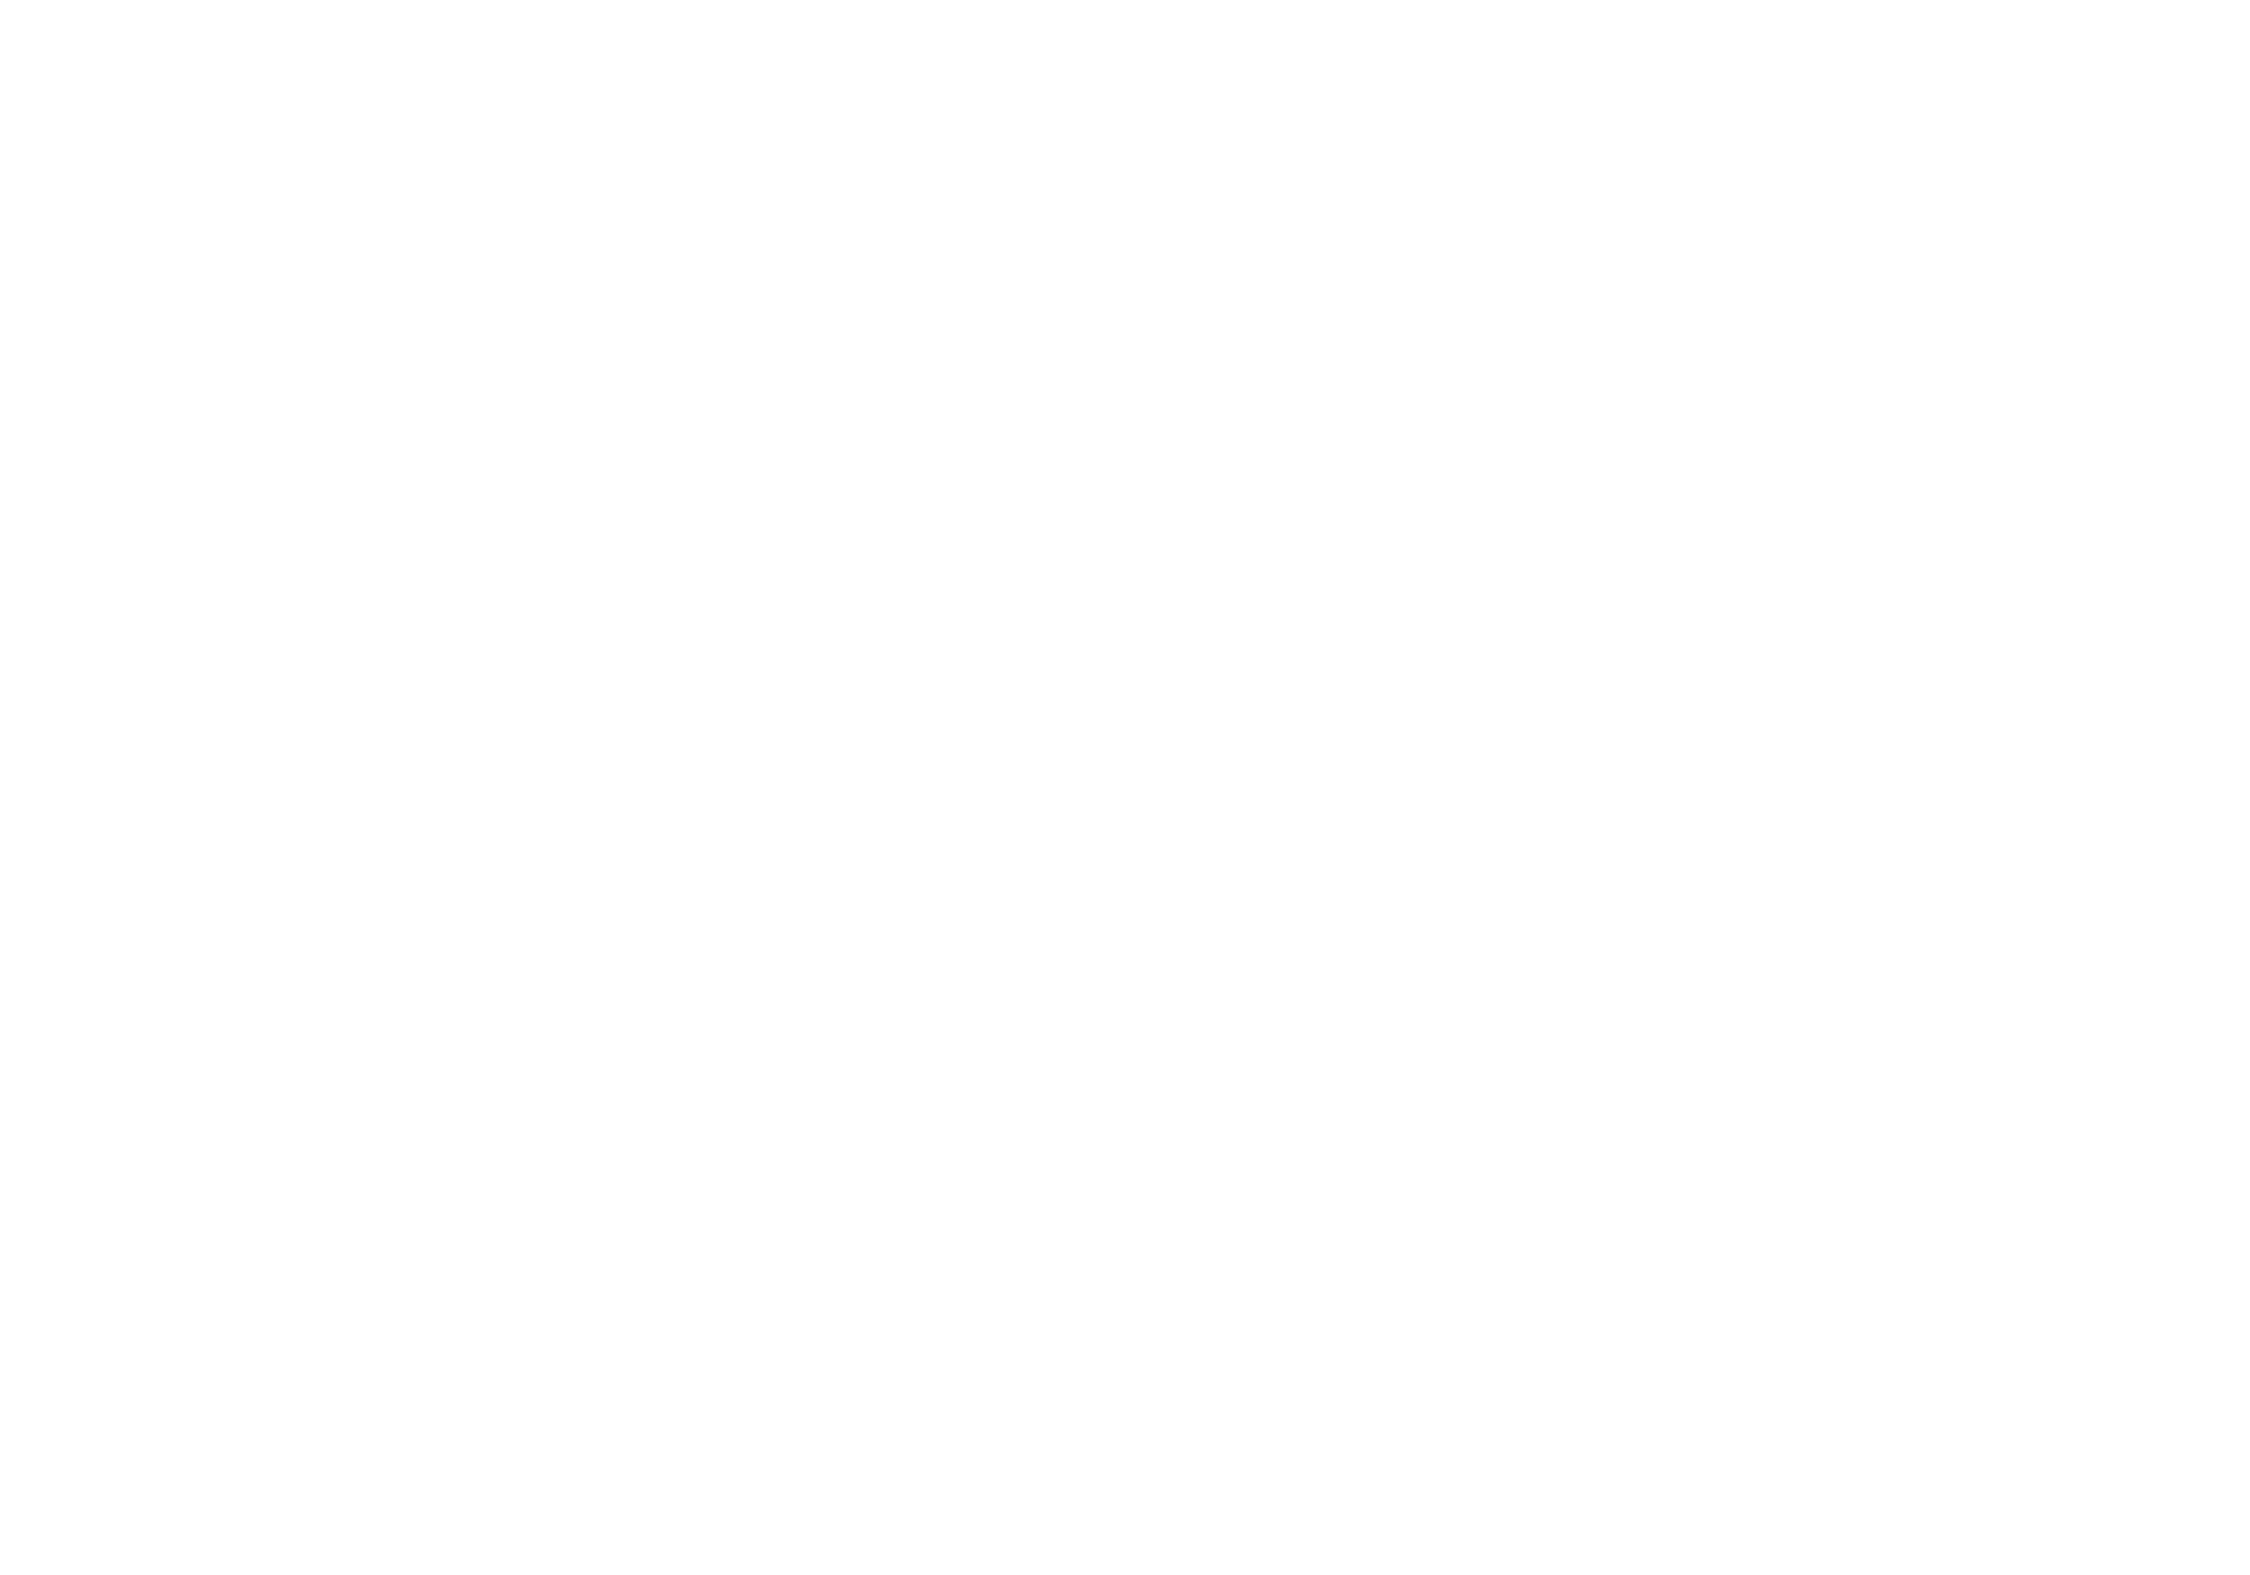 Disney Programs Learning Catalog